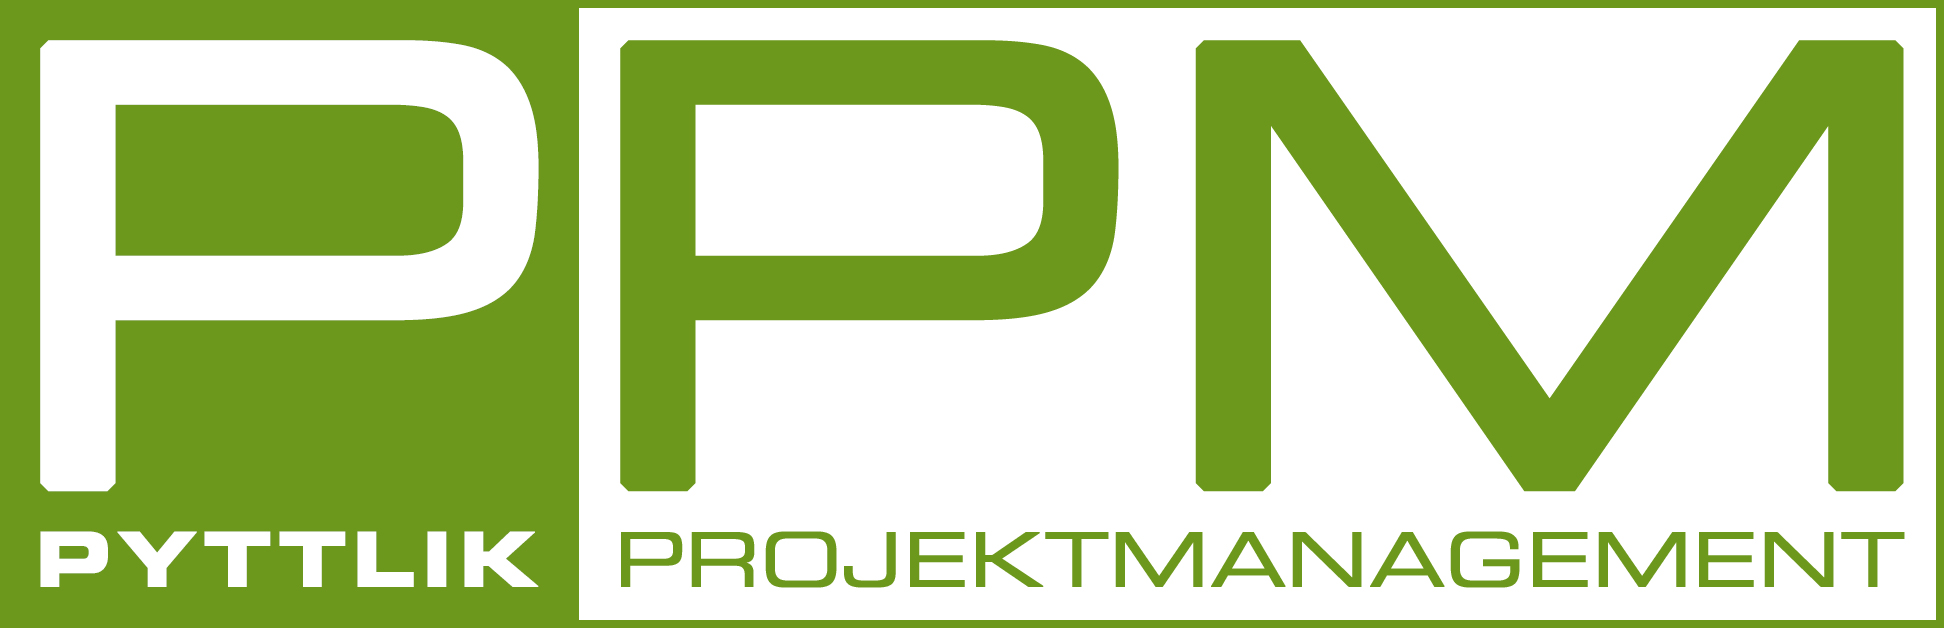 Pyttlik Projektmanagement GmbH arbeitet mit AVA.relax